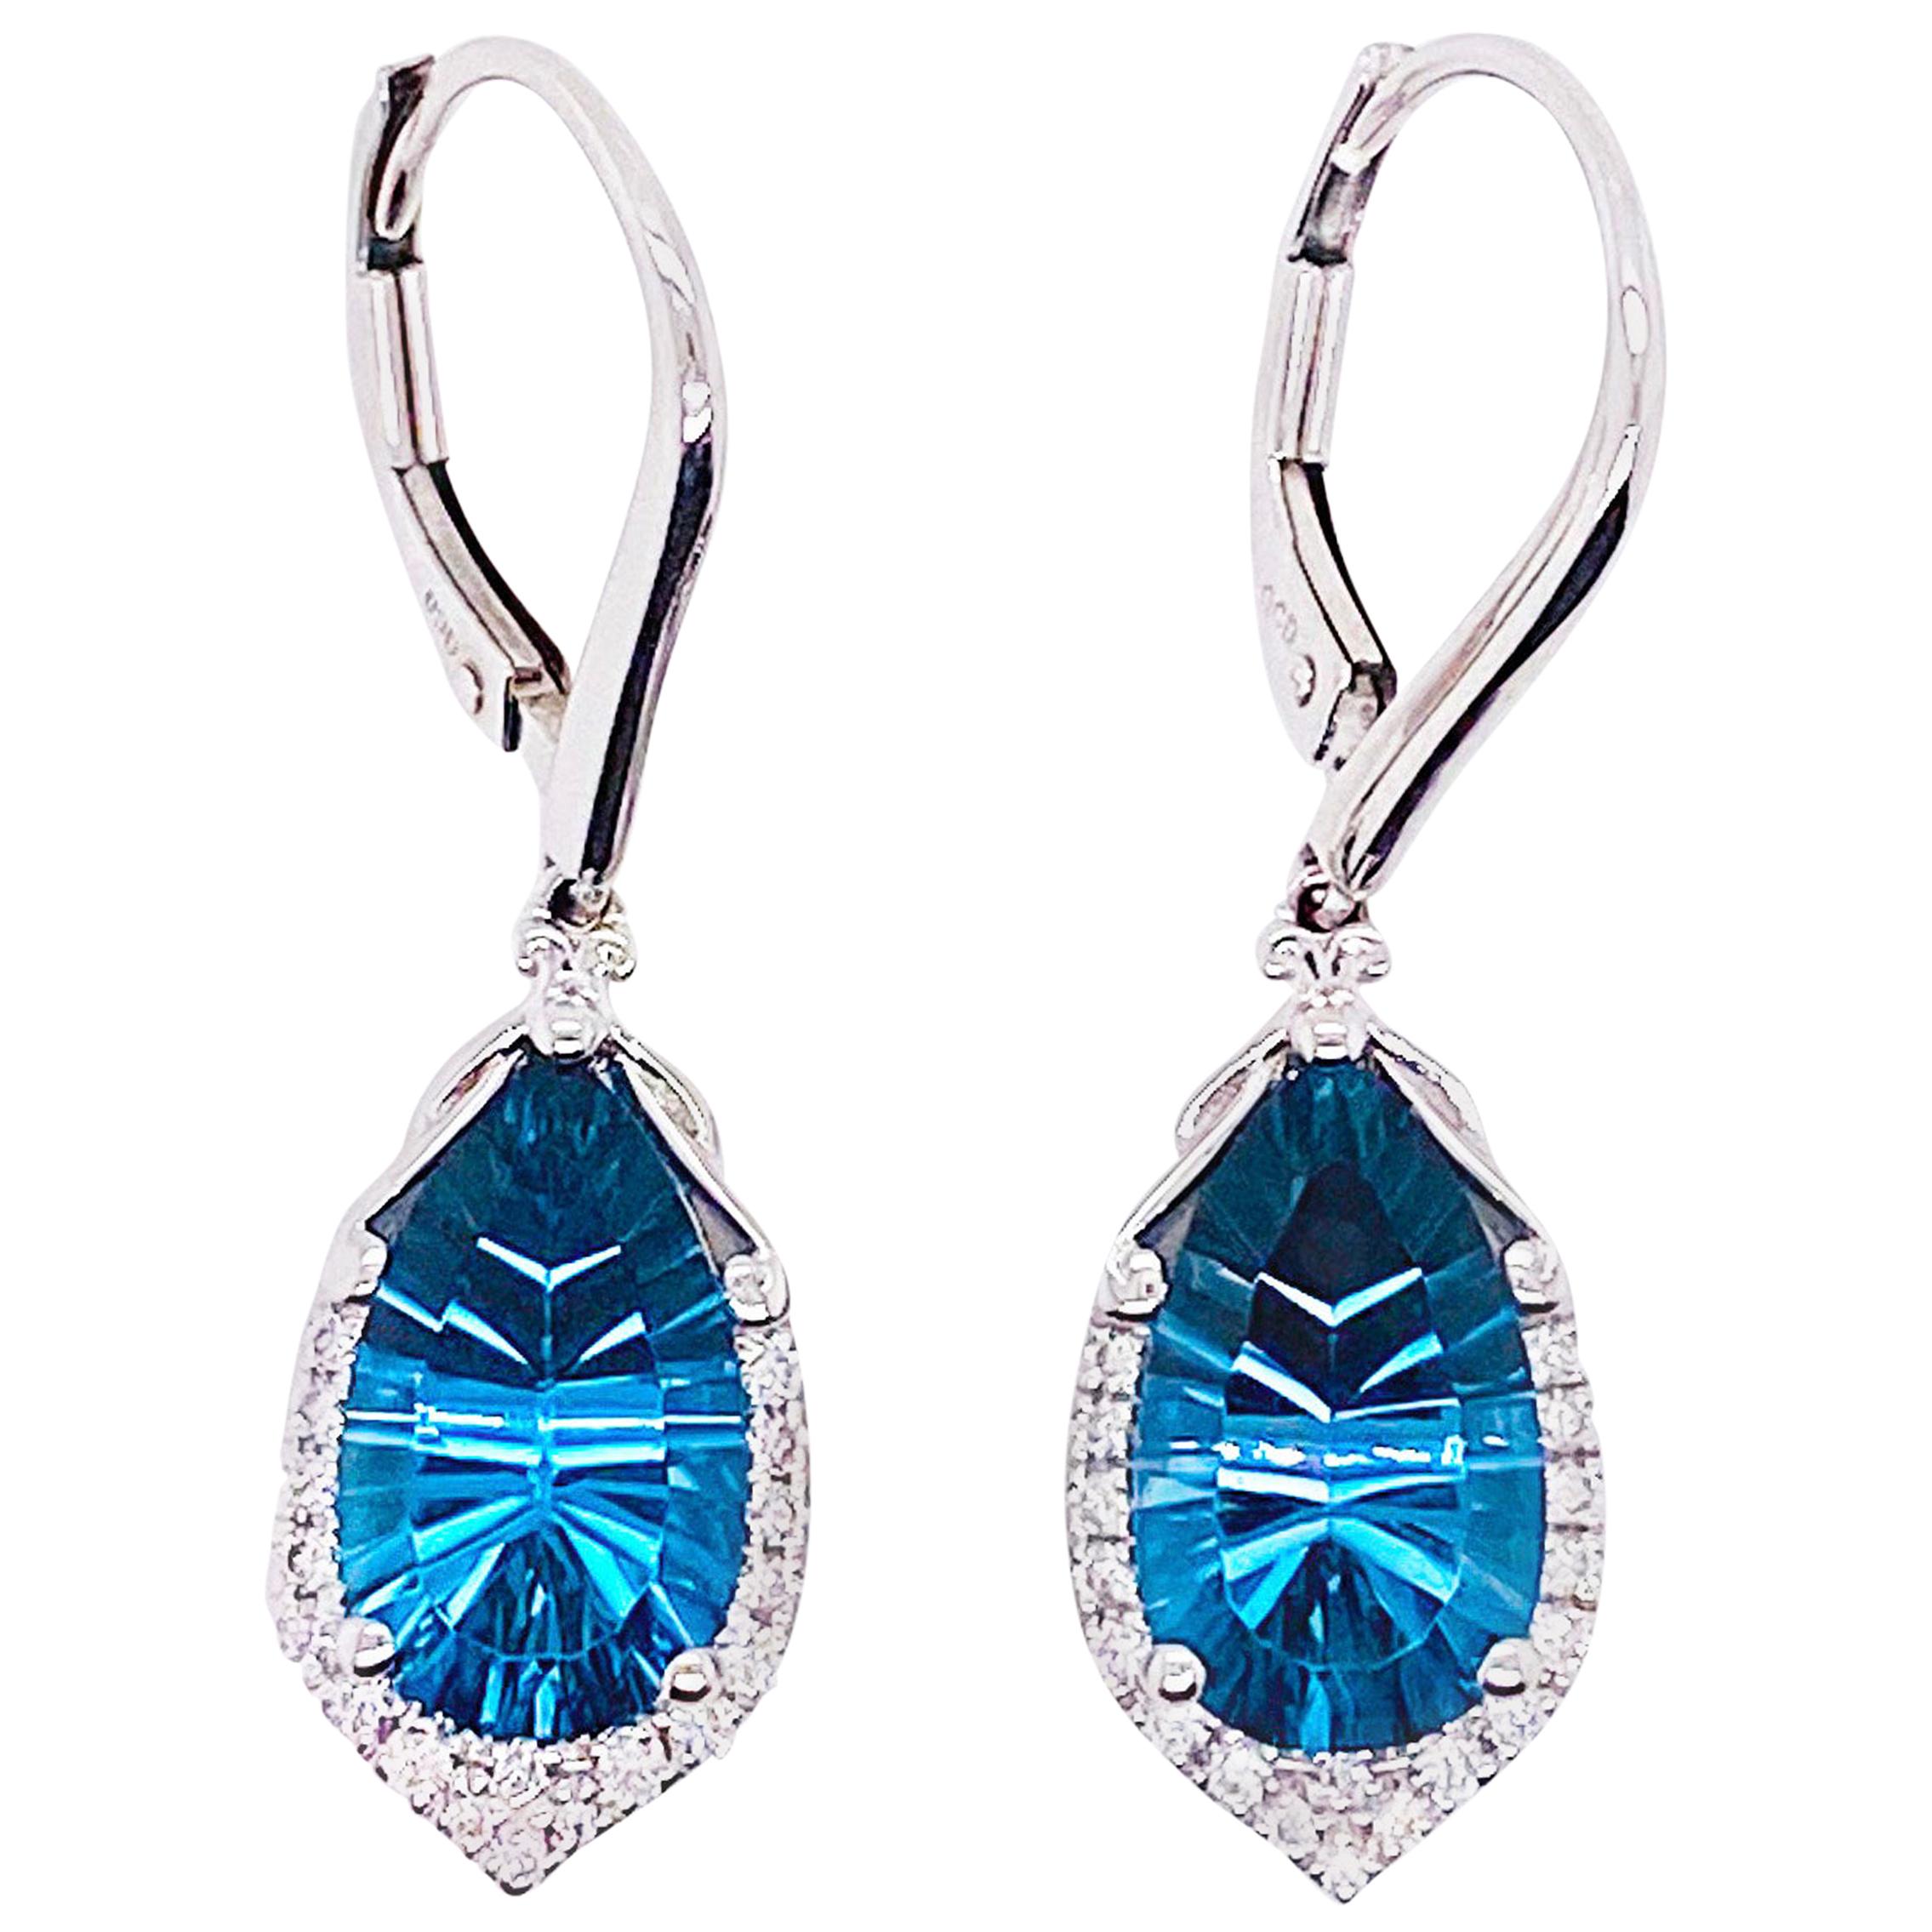 6 Carat London Blue Topaz & Diamond Earring Dangles 14 Karat Gold Topaz Earring